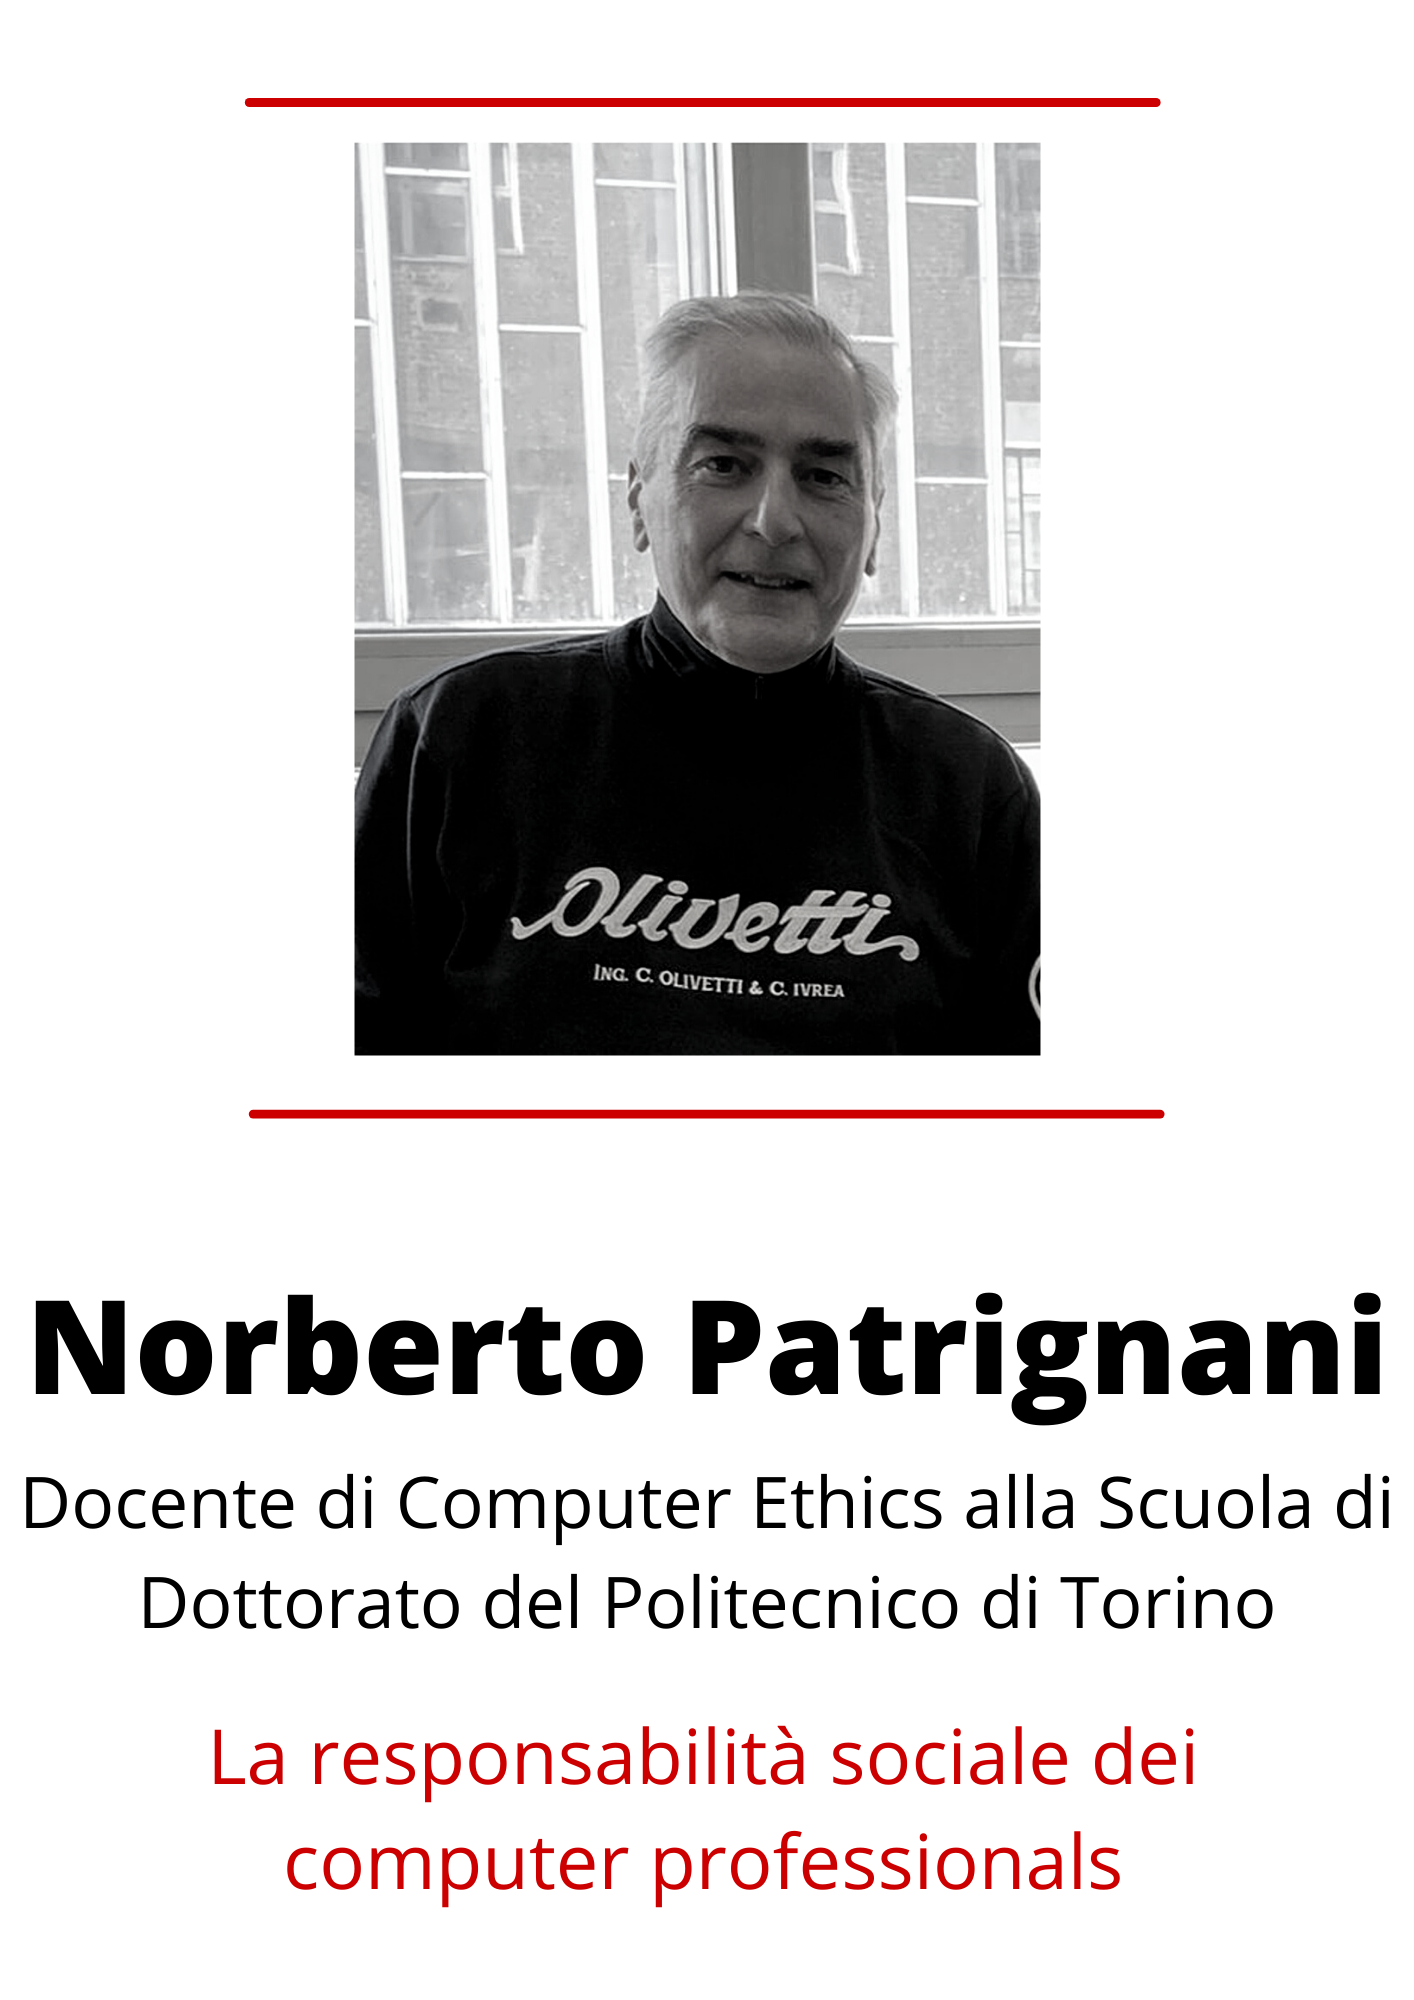 Card Norberto Patrignani